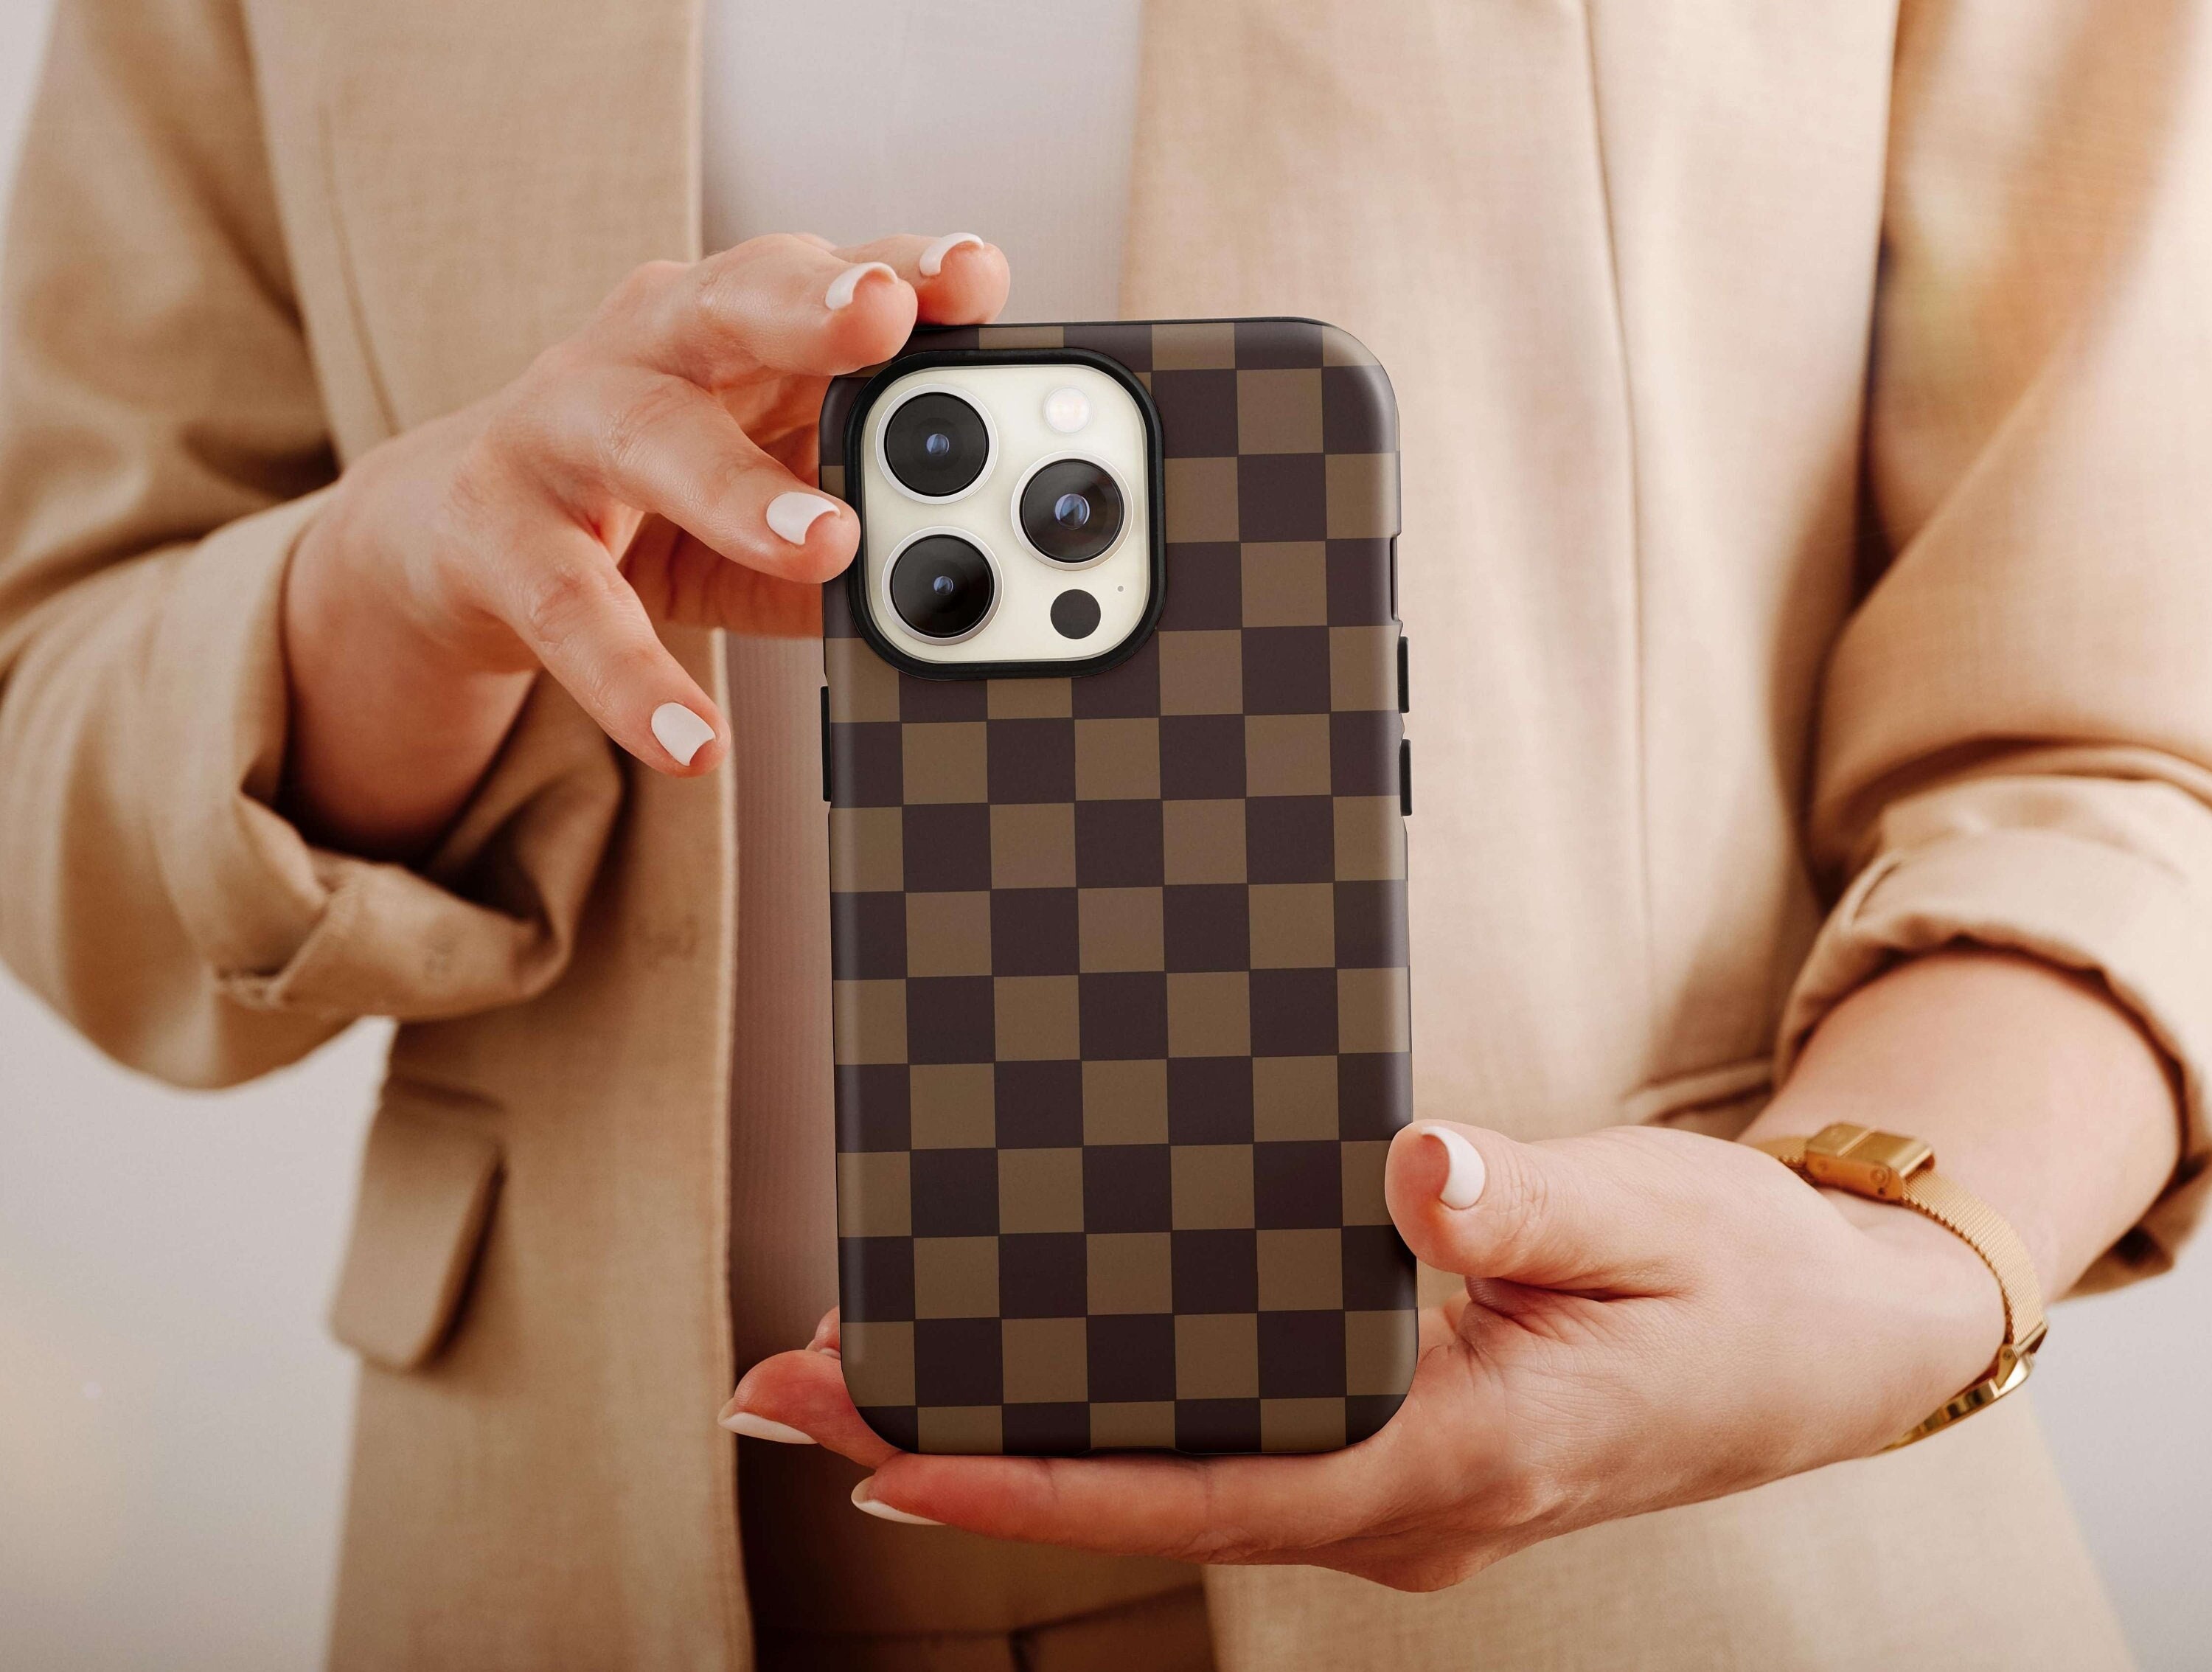 Pink Louis Vuitton Seamless Pattern iPhone 14 Pro Case